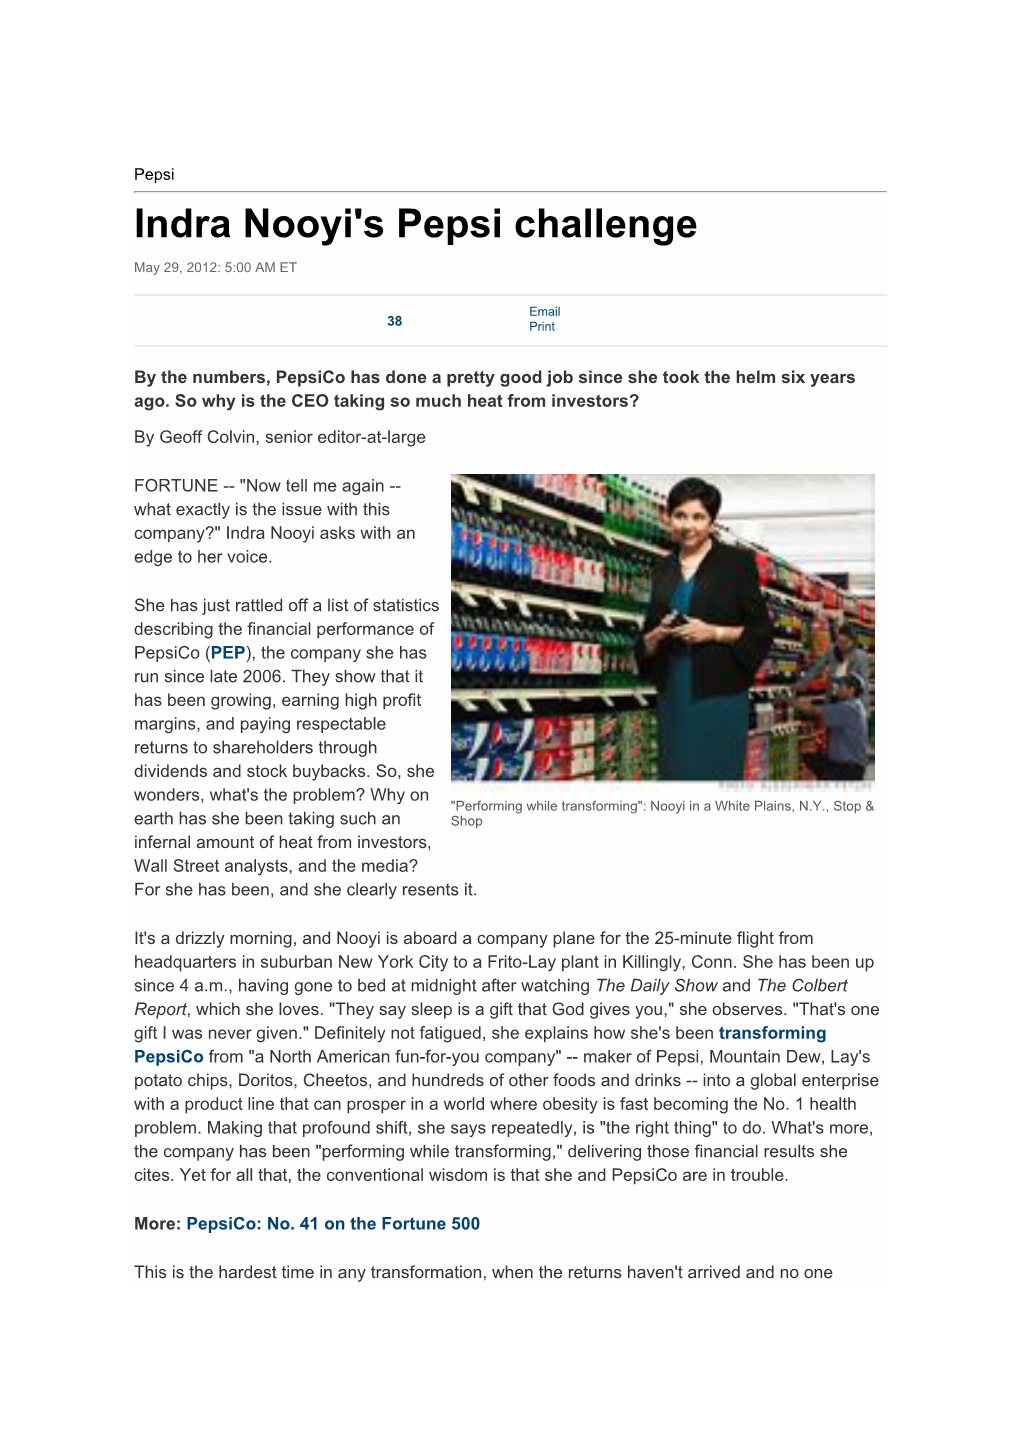 Indra Nooyi's Pepsi Challenge